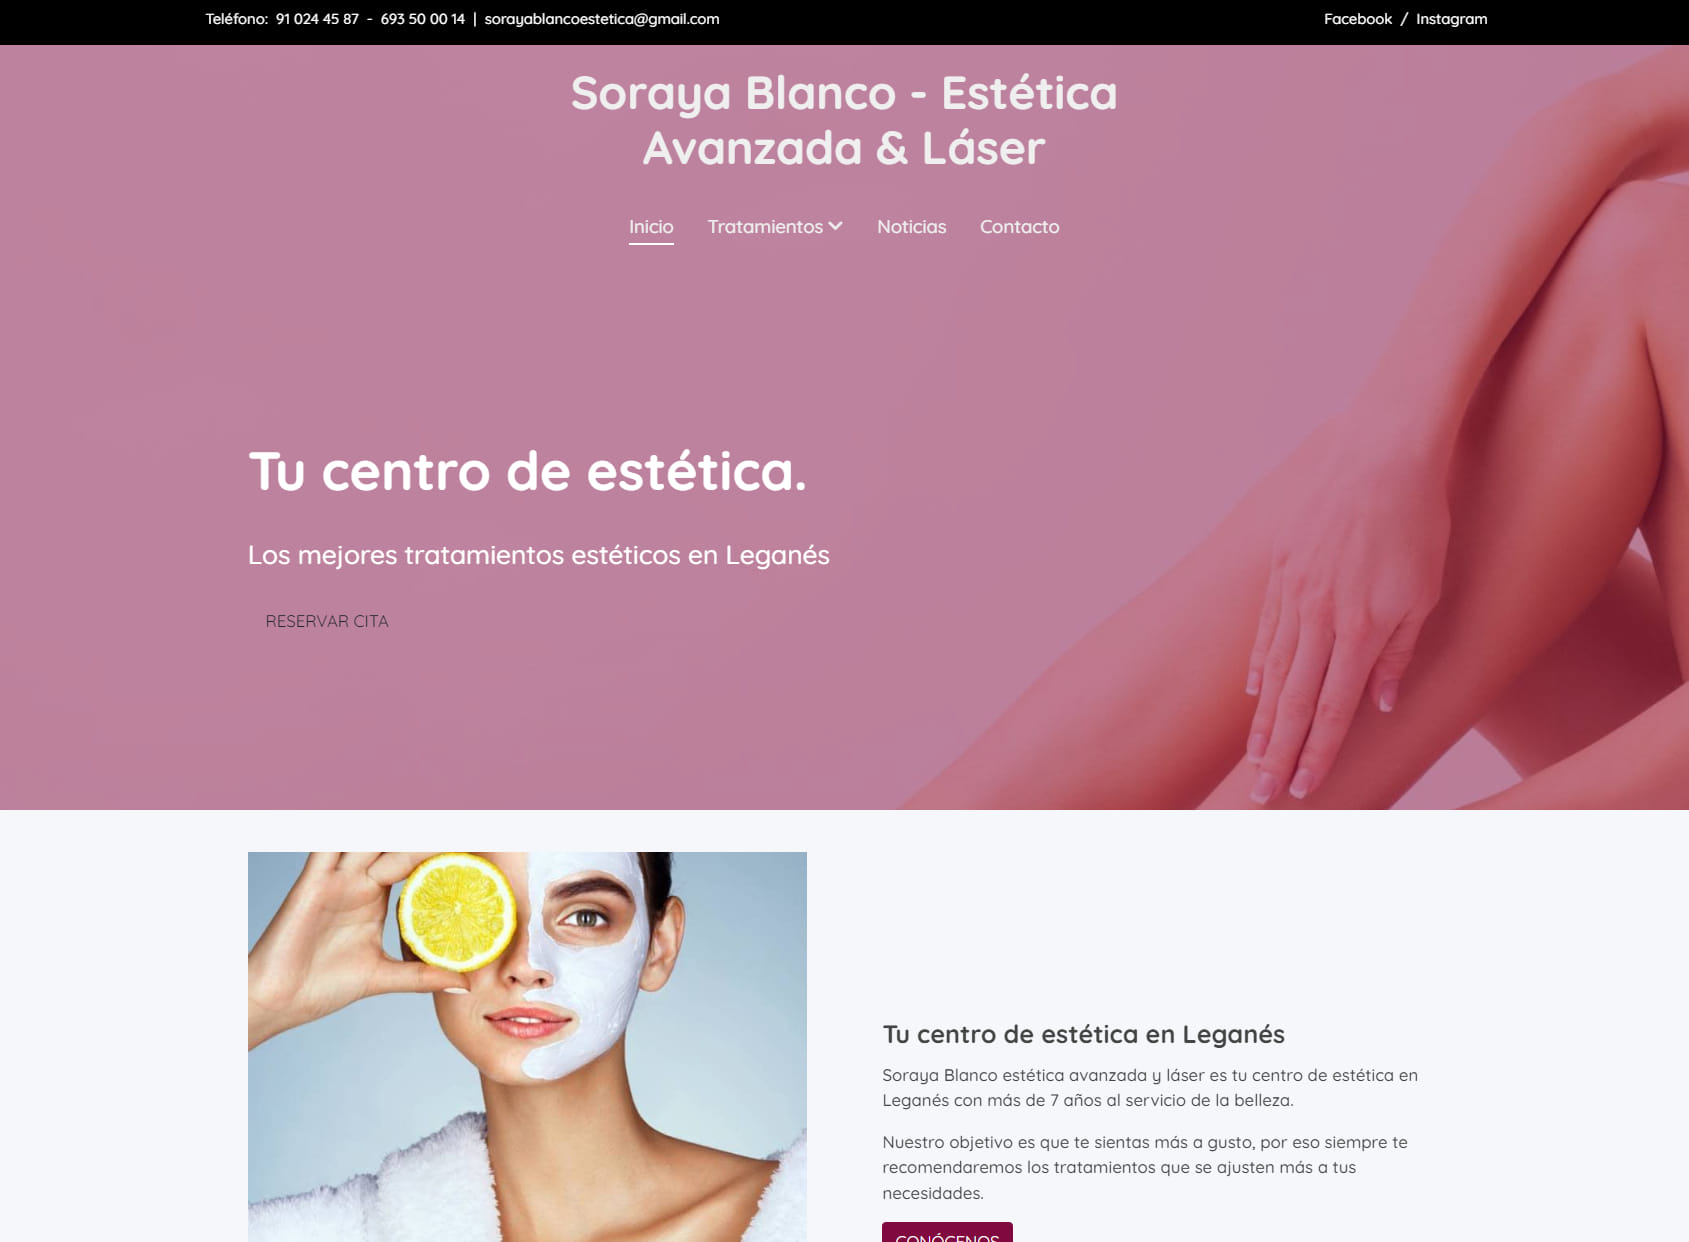 Soraya Blanco centro de estética & laser